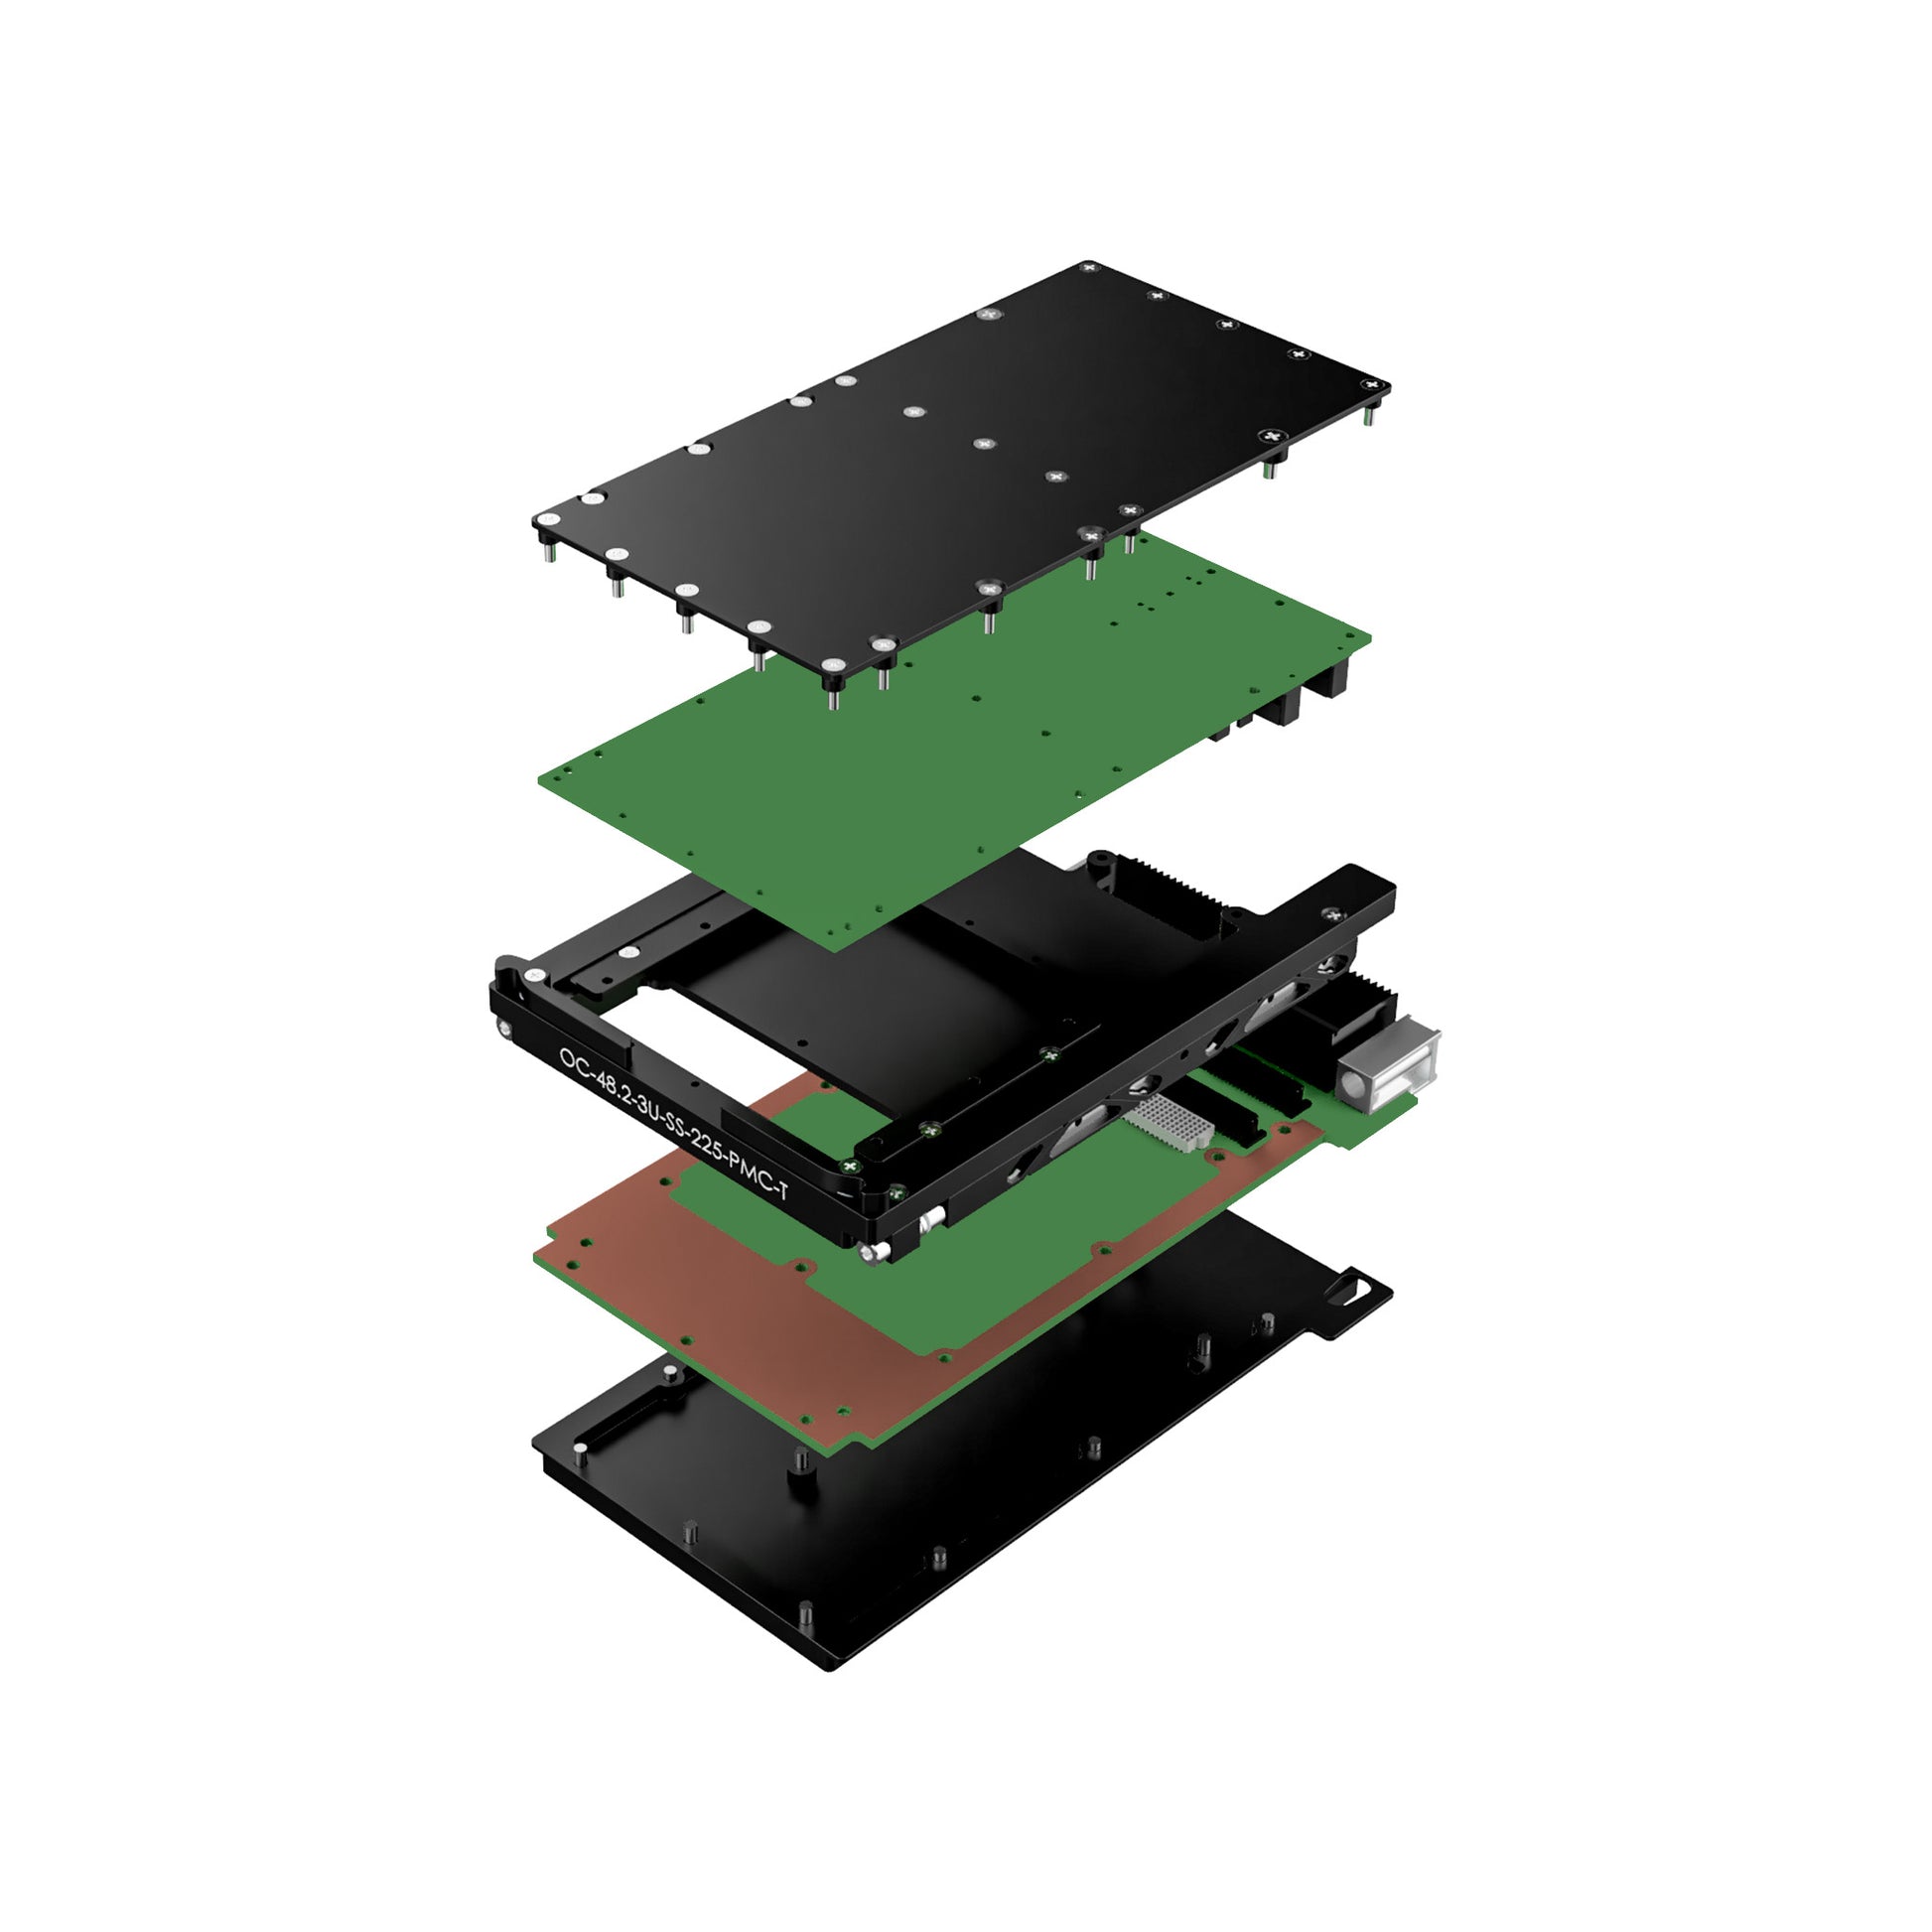 Vita 48.2 3U VPX Development Kit (160mm Thick PCB), ruggedized metal enclosure for embedded computer board 